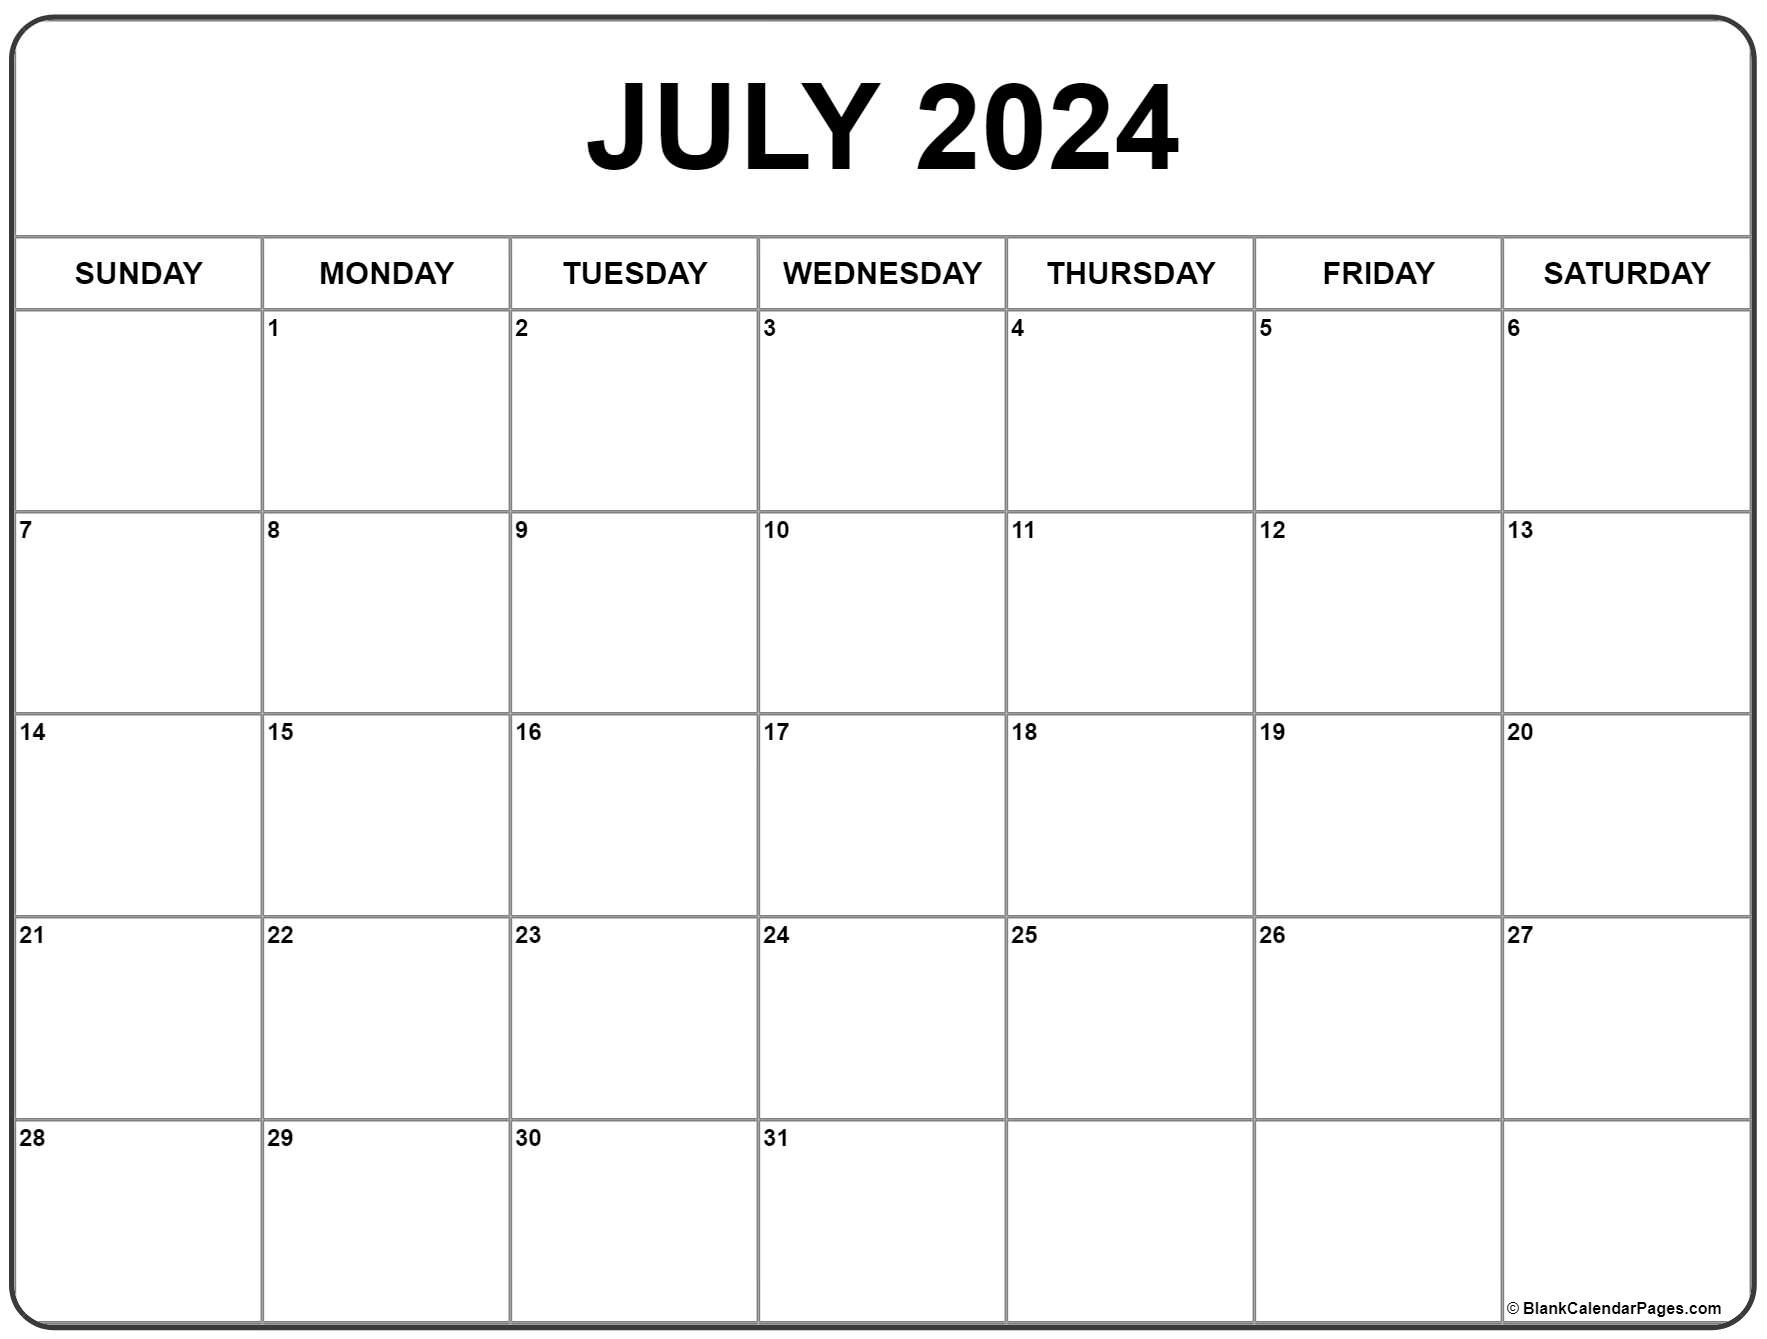 July 2024 Calendar | Free Printable Calendar for 2024 Calendar Printable July